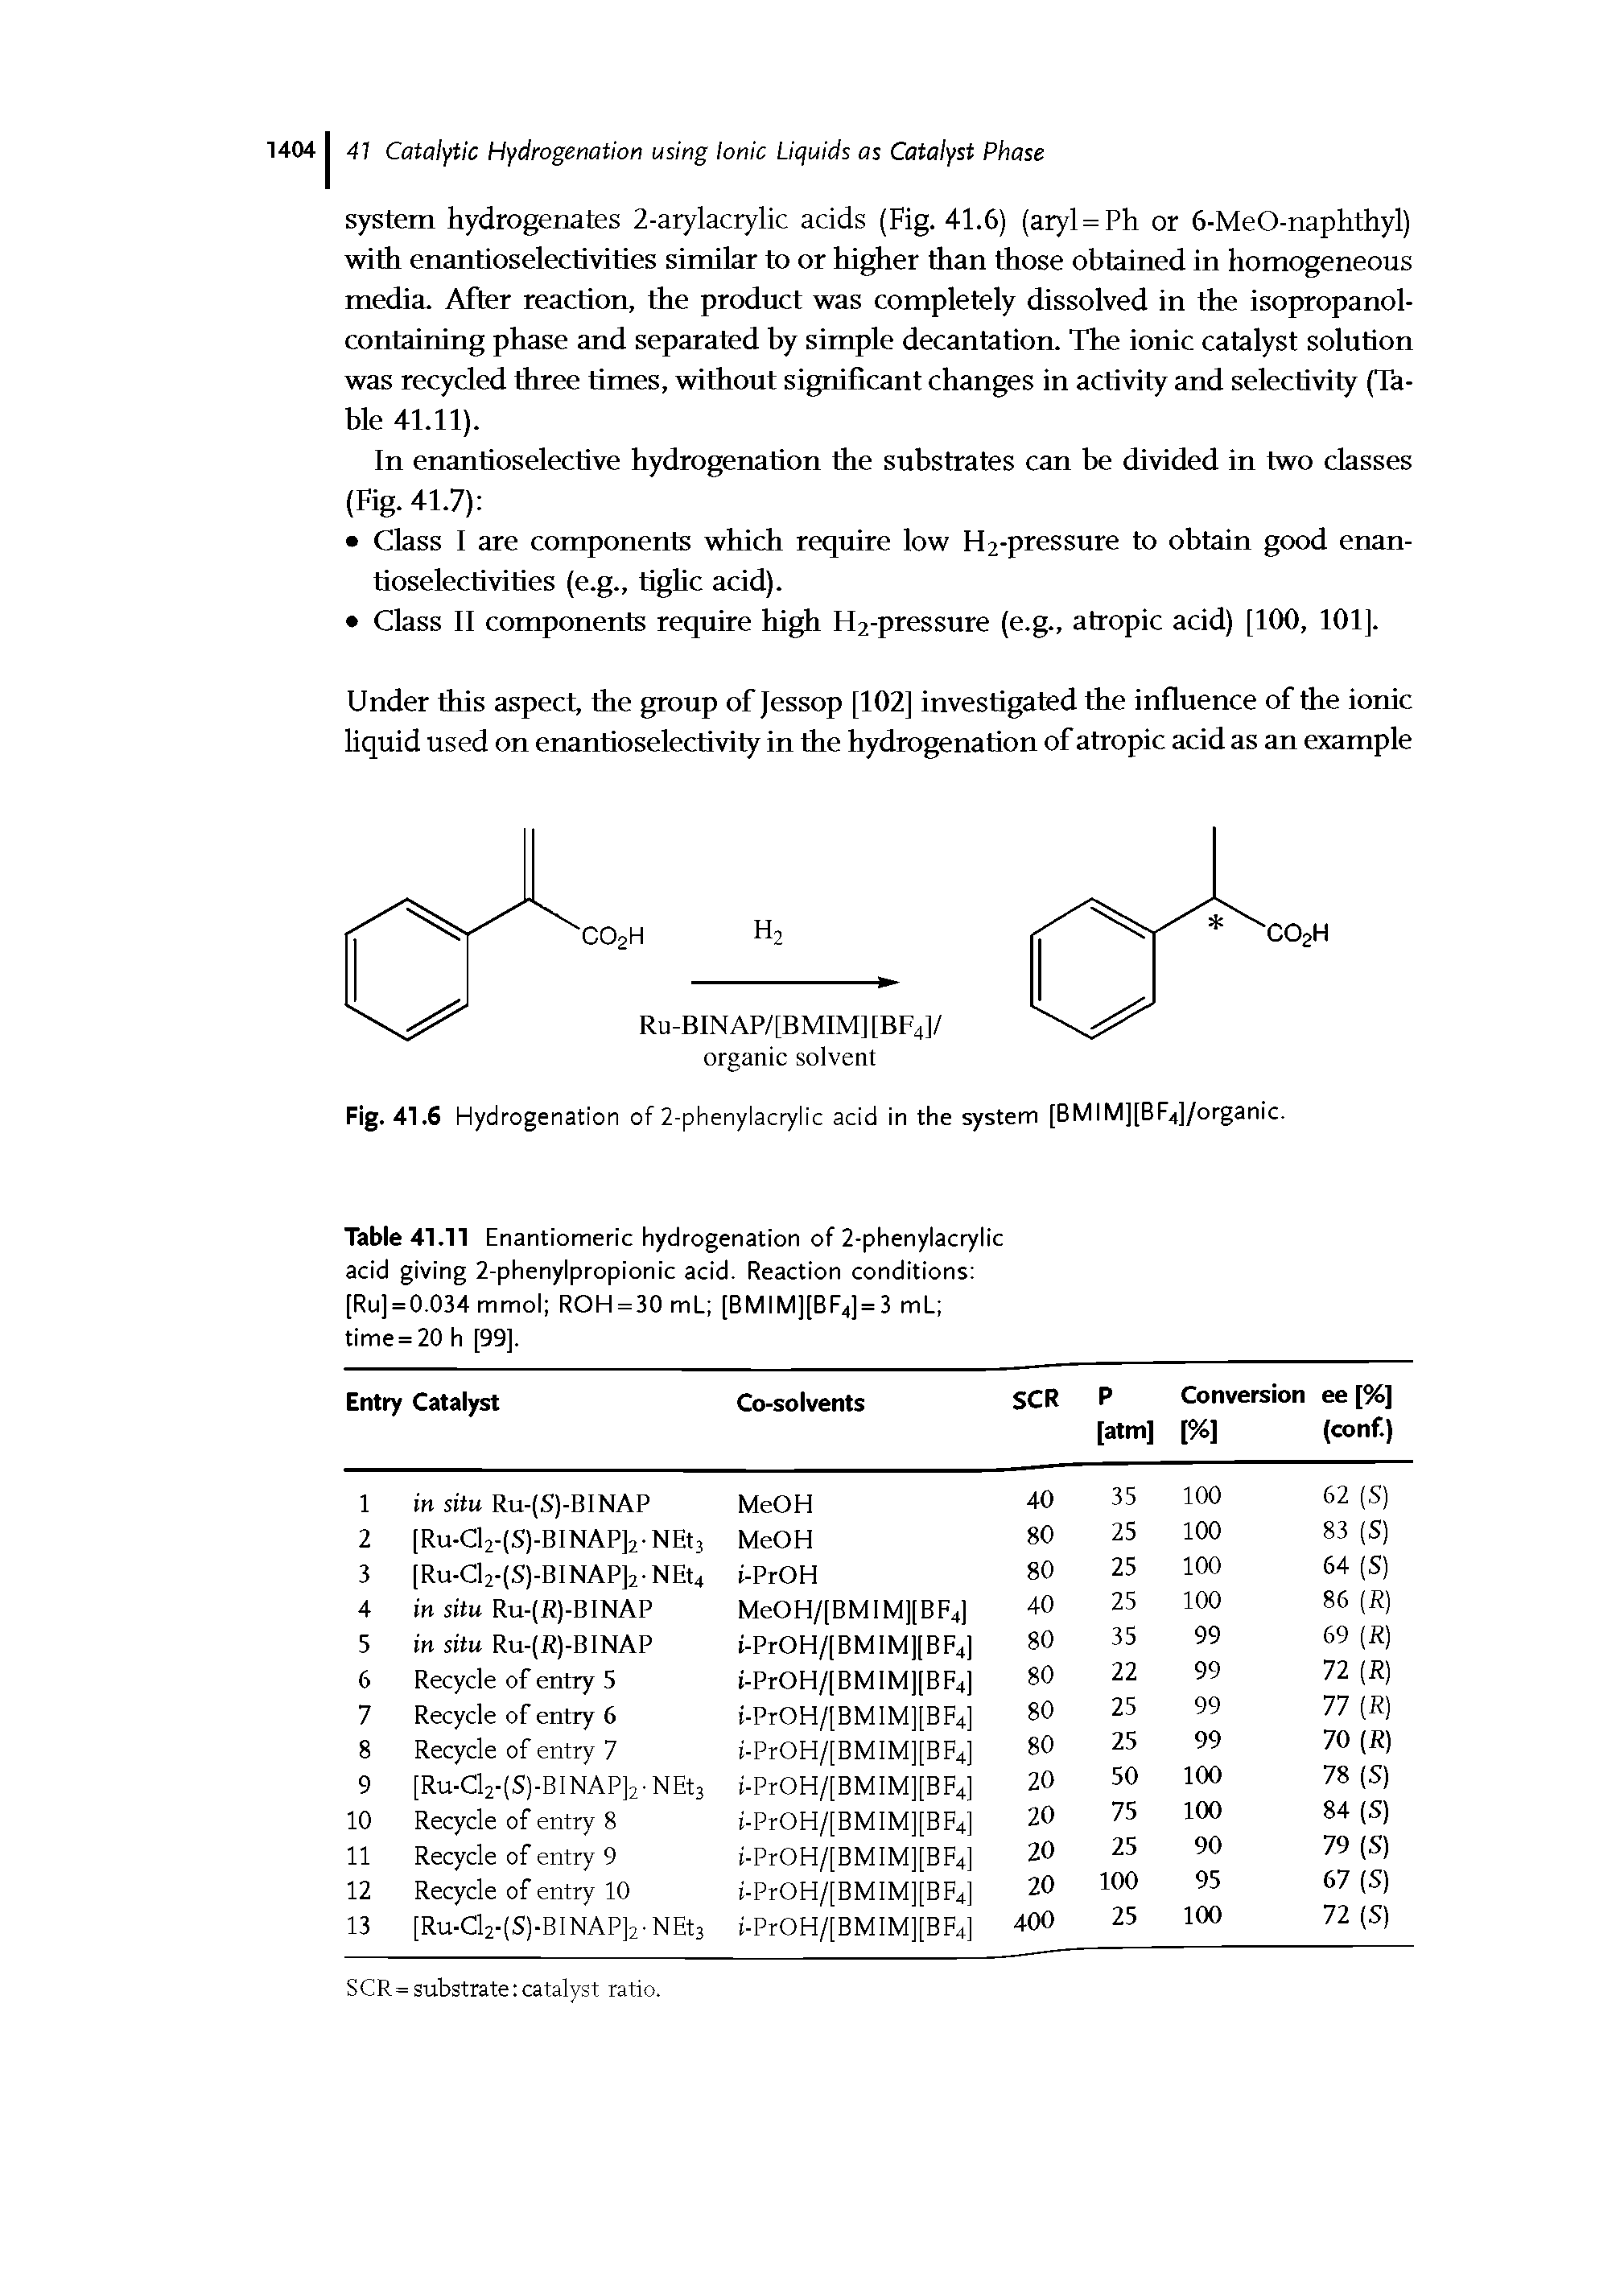 Table 41.11 Enantiomeric hydrogenation of 2-phenylacrylic acid giving 2-phenylpropionic acid. Reaction conditions [Ru] = 0.034 mmol ROH = 30 mL [BMIM][BF4] = 3 mL time = 20 h [99].